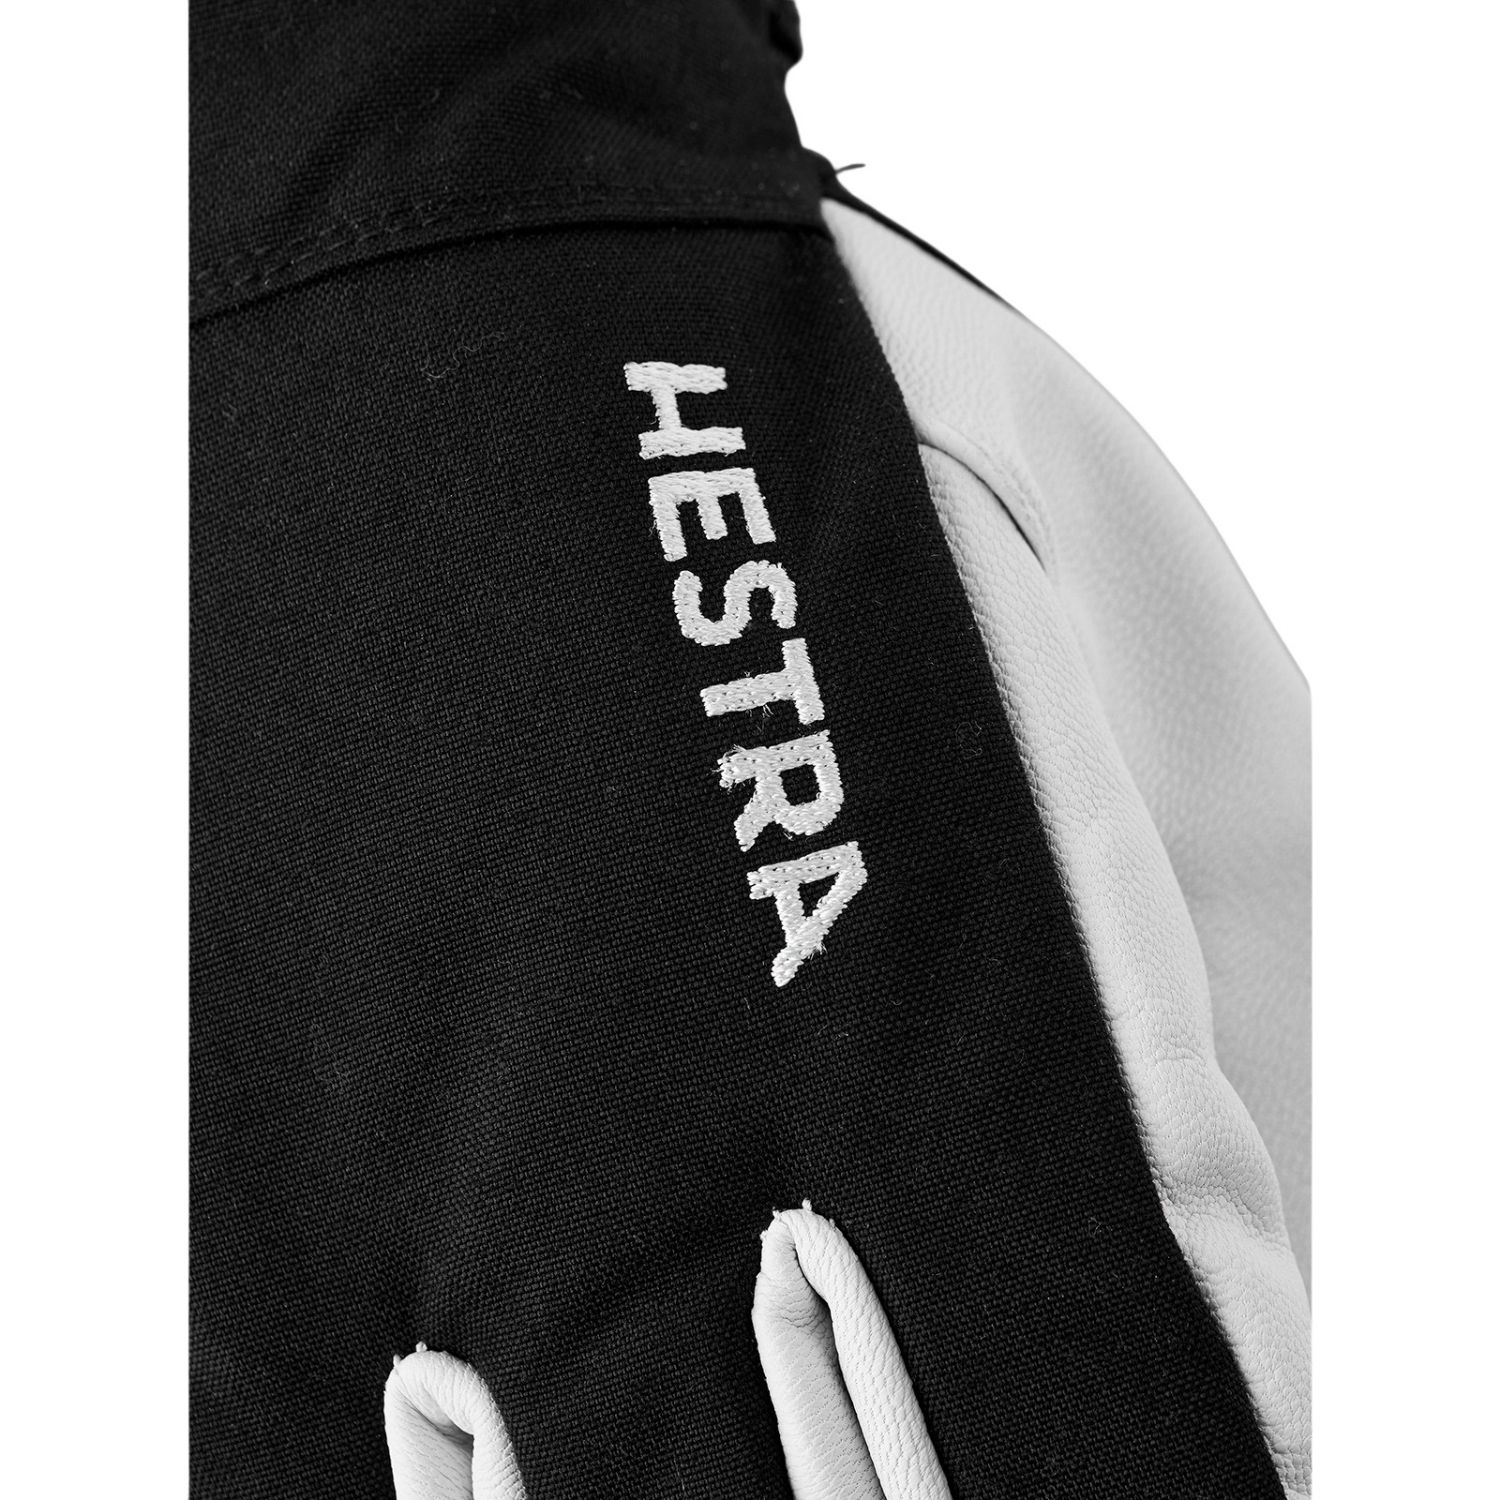 Hestra Army Leather Heli gants de ski, noir